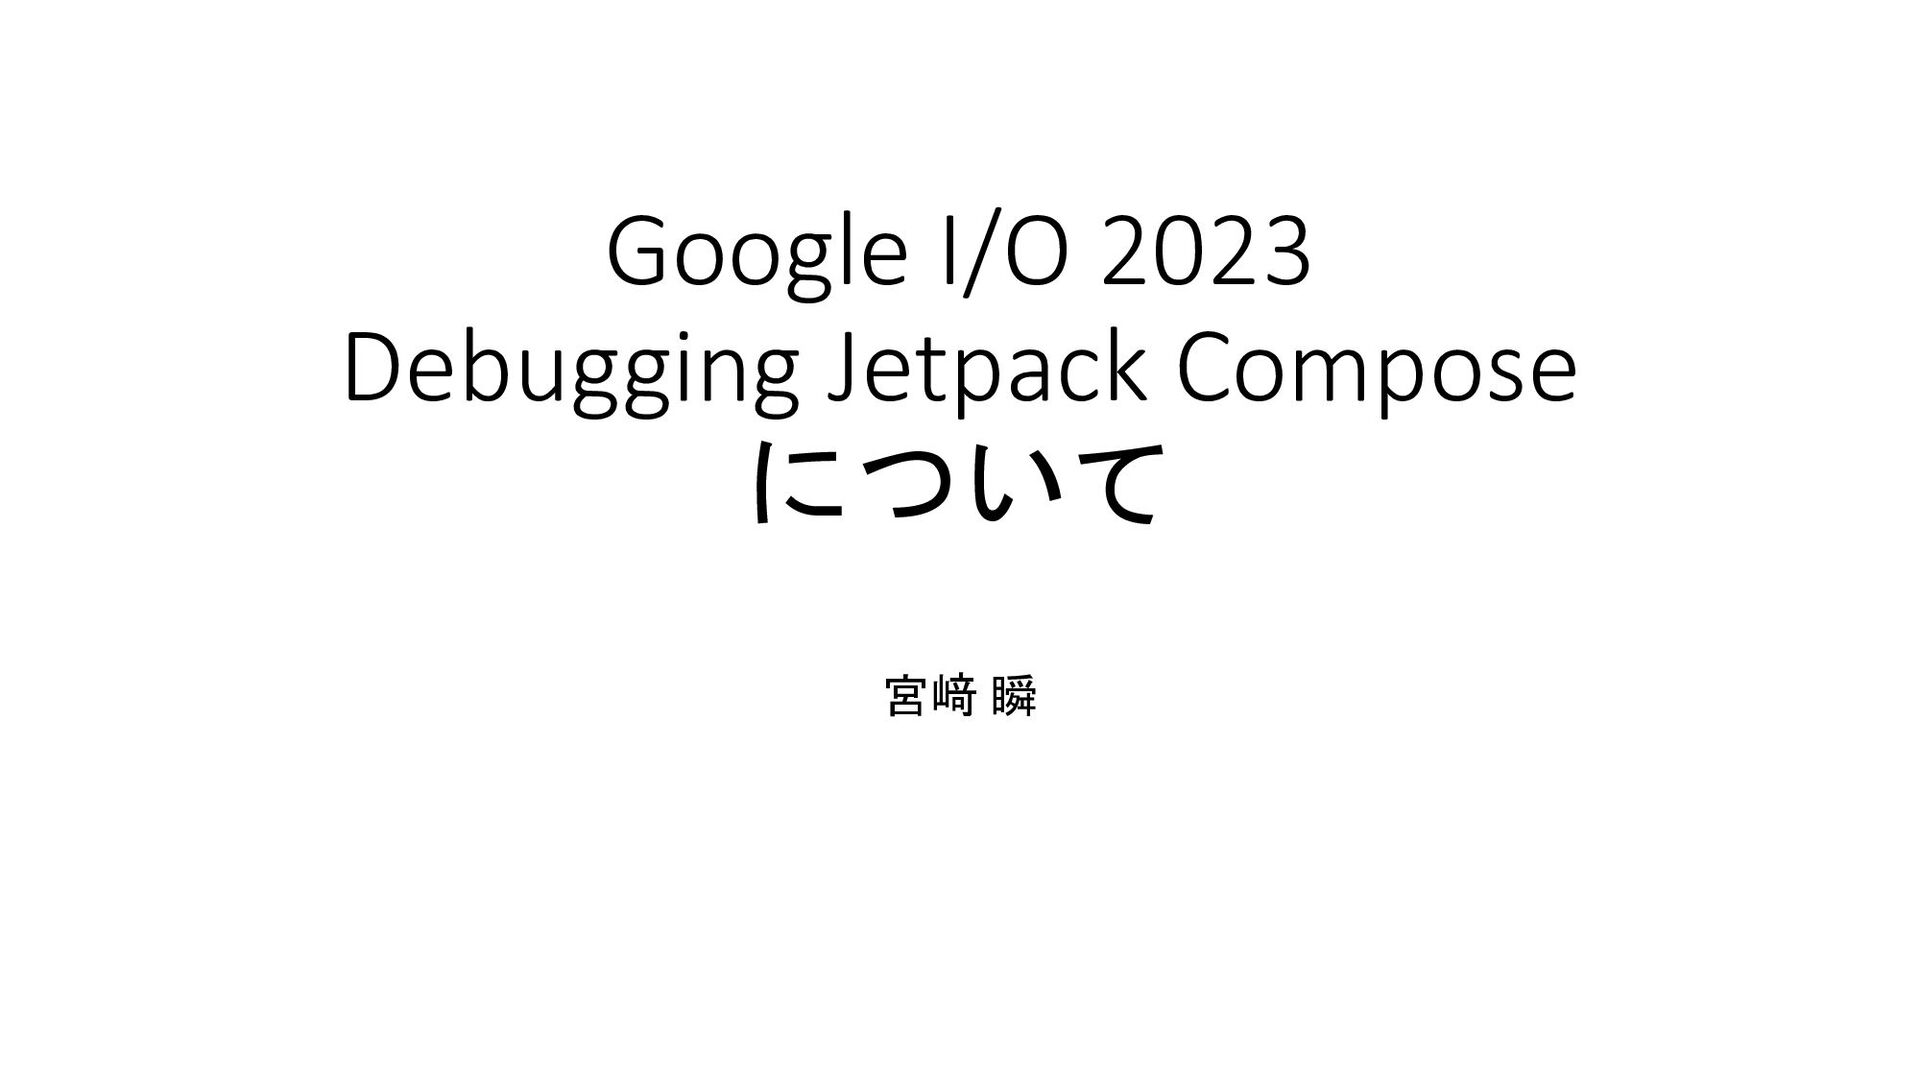 Slide Top: Google I/O 2023 - Debugging Jetpack Composeについて